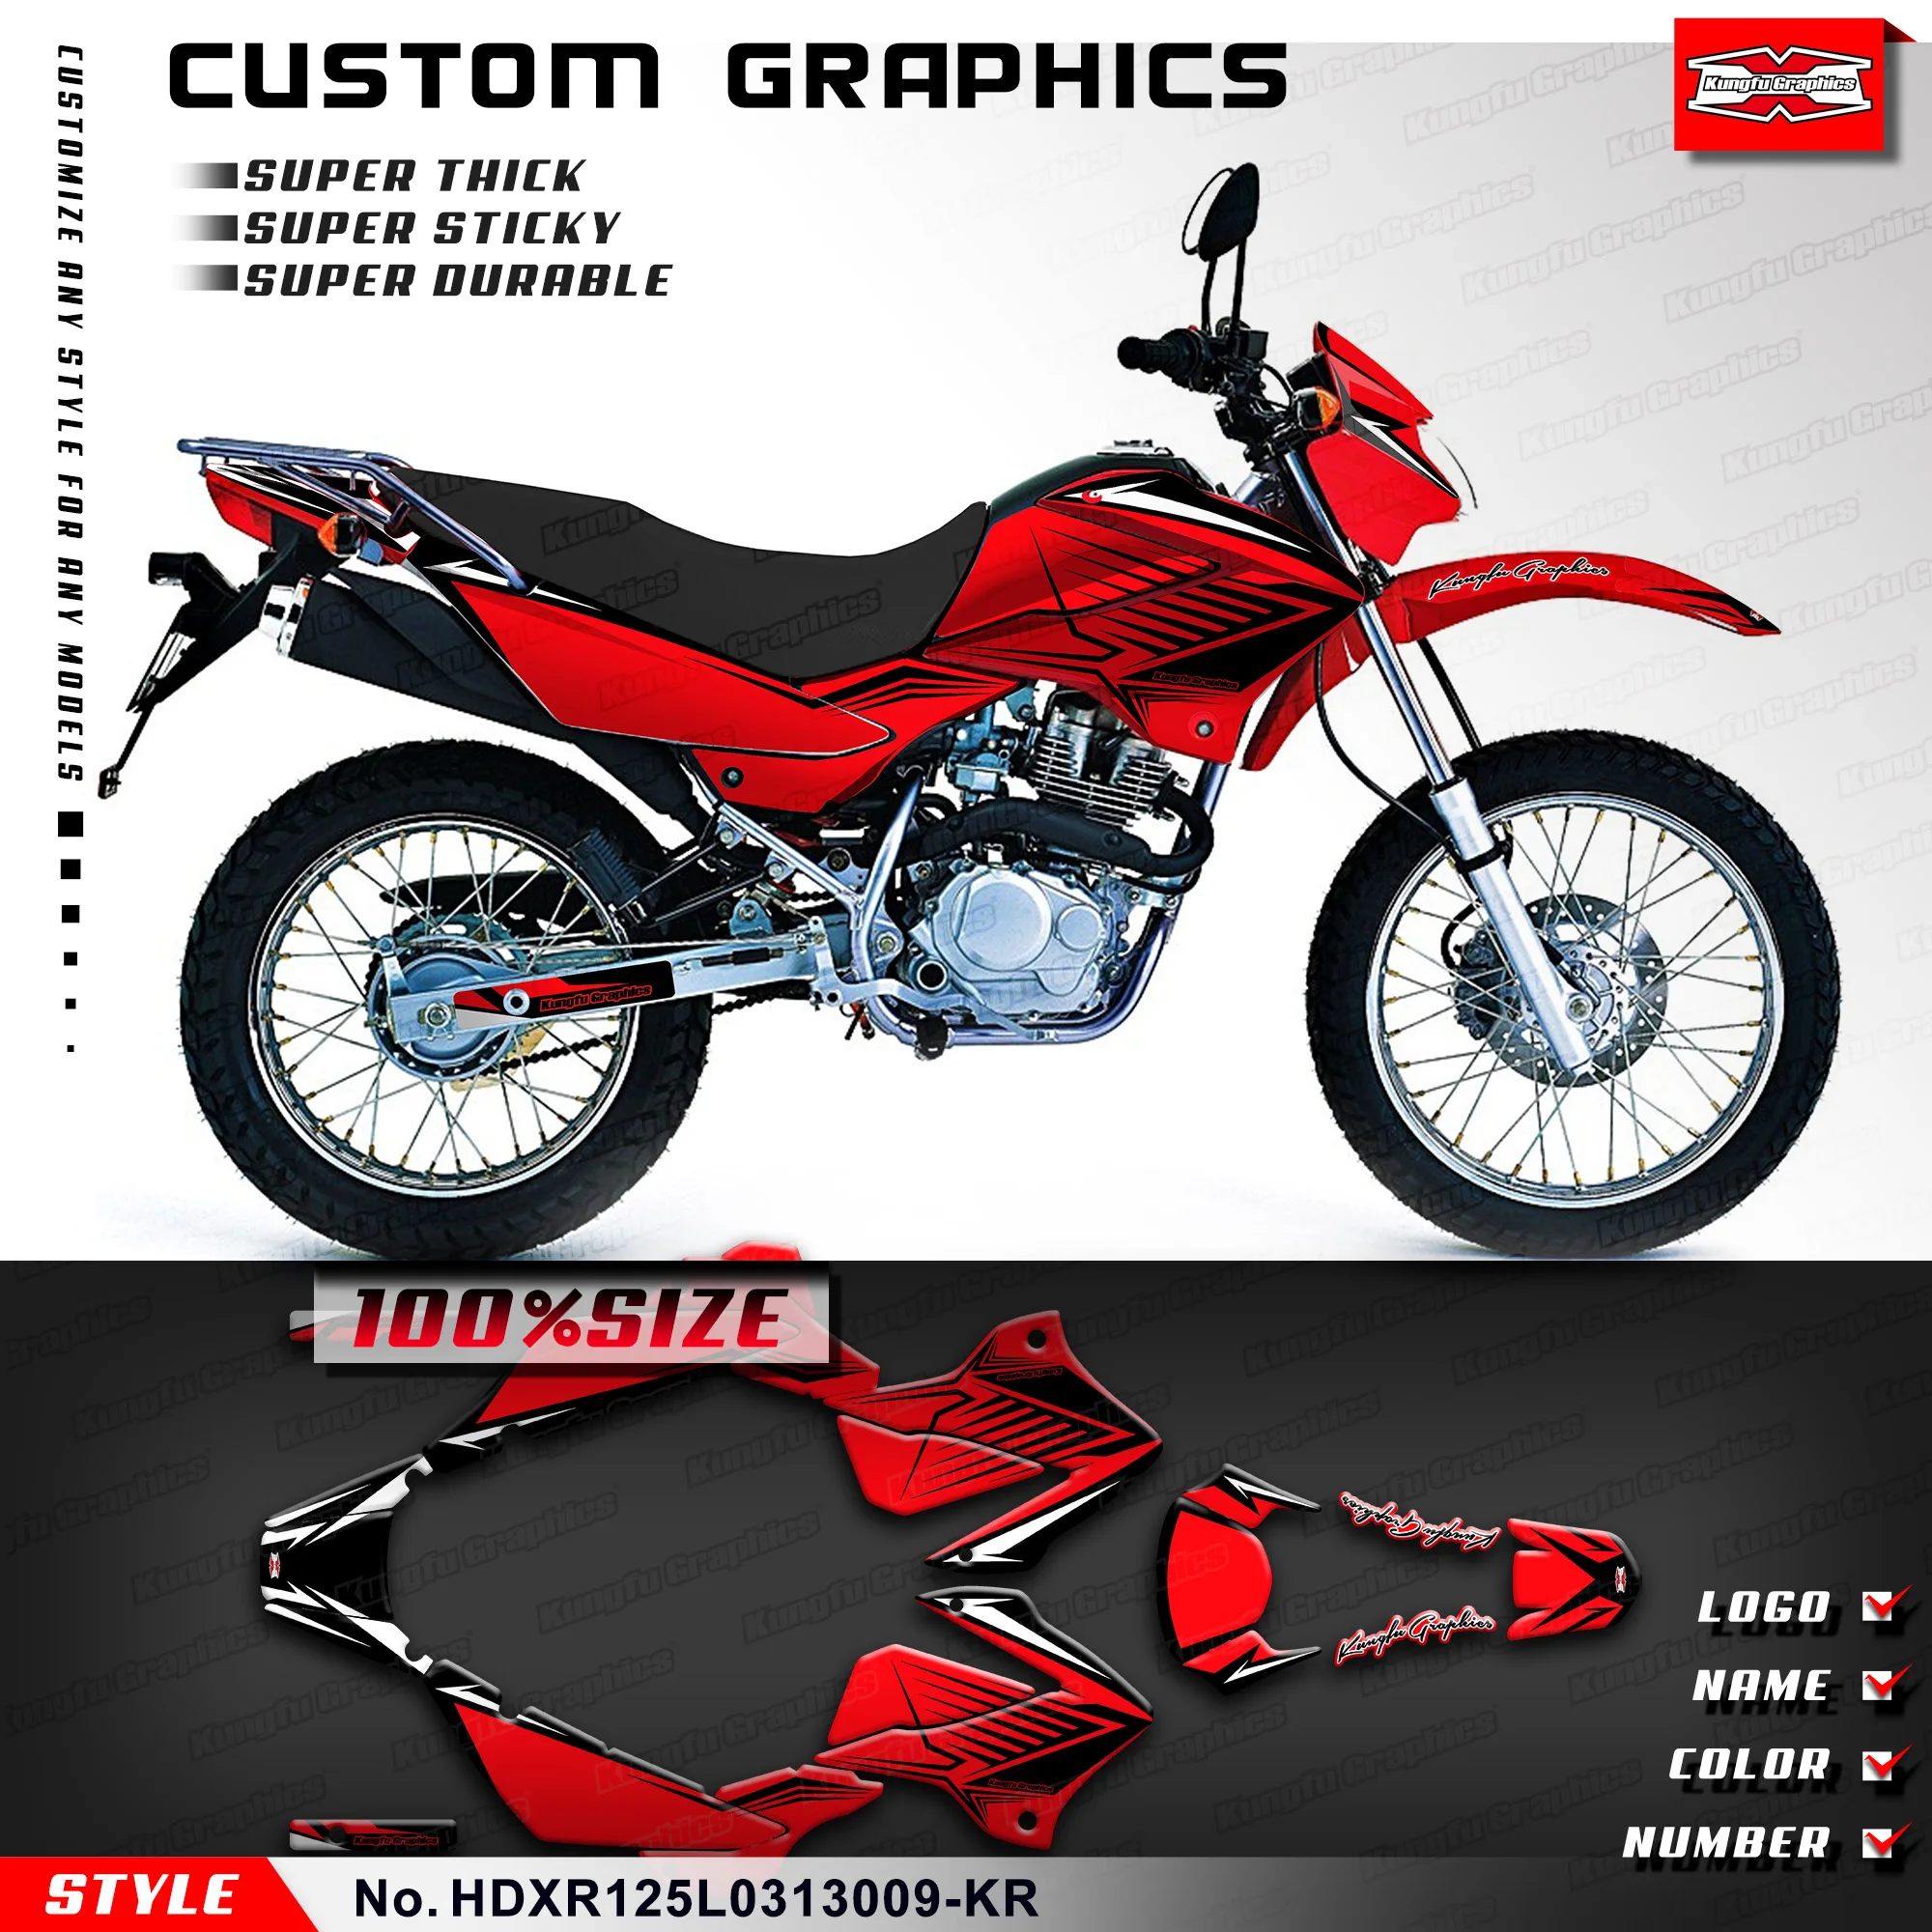 

KUNGFU GRAPHICS Stickers Decals Kit for Honda XR125L 2003 2004 2005 2006 2007 2008 2009 2010 2011 2012 2013 HDXR125L0313009-KR